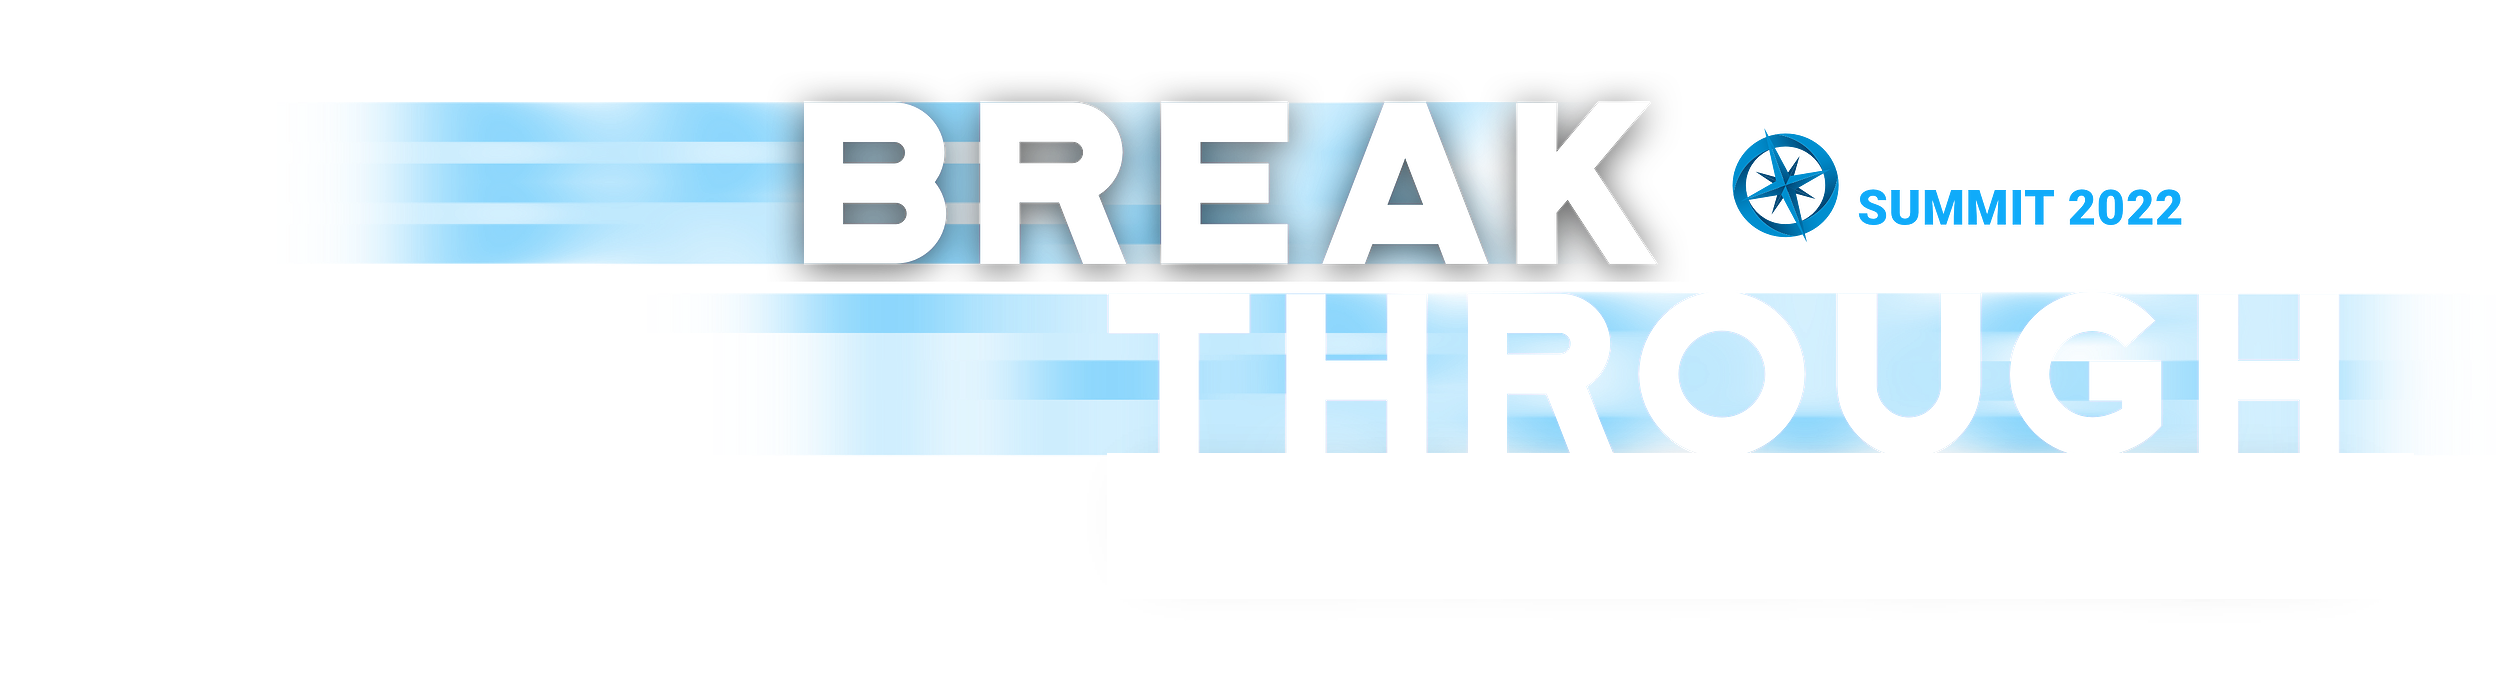 breakthrough-transparent-jp